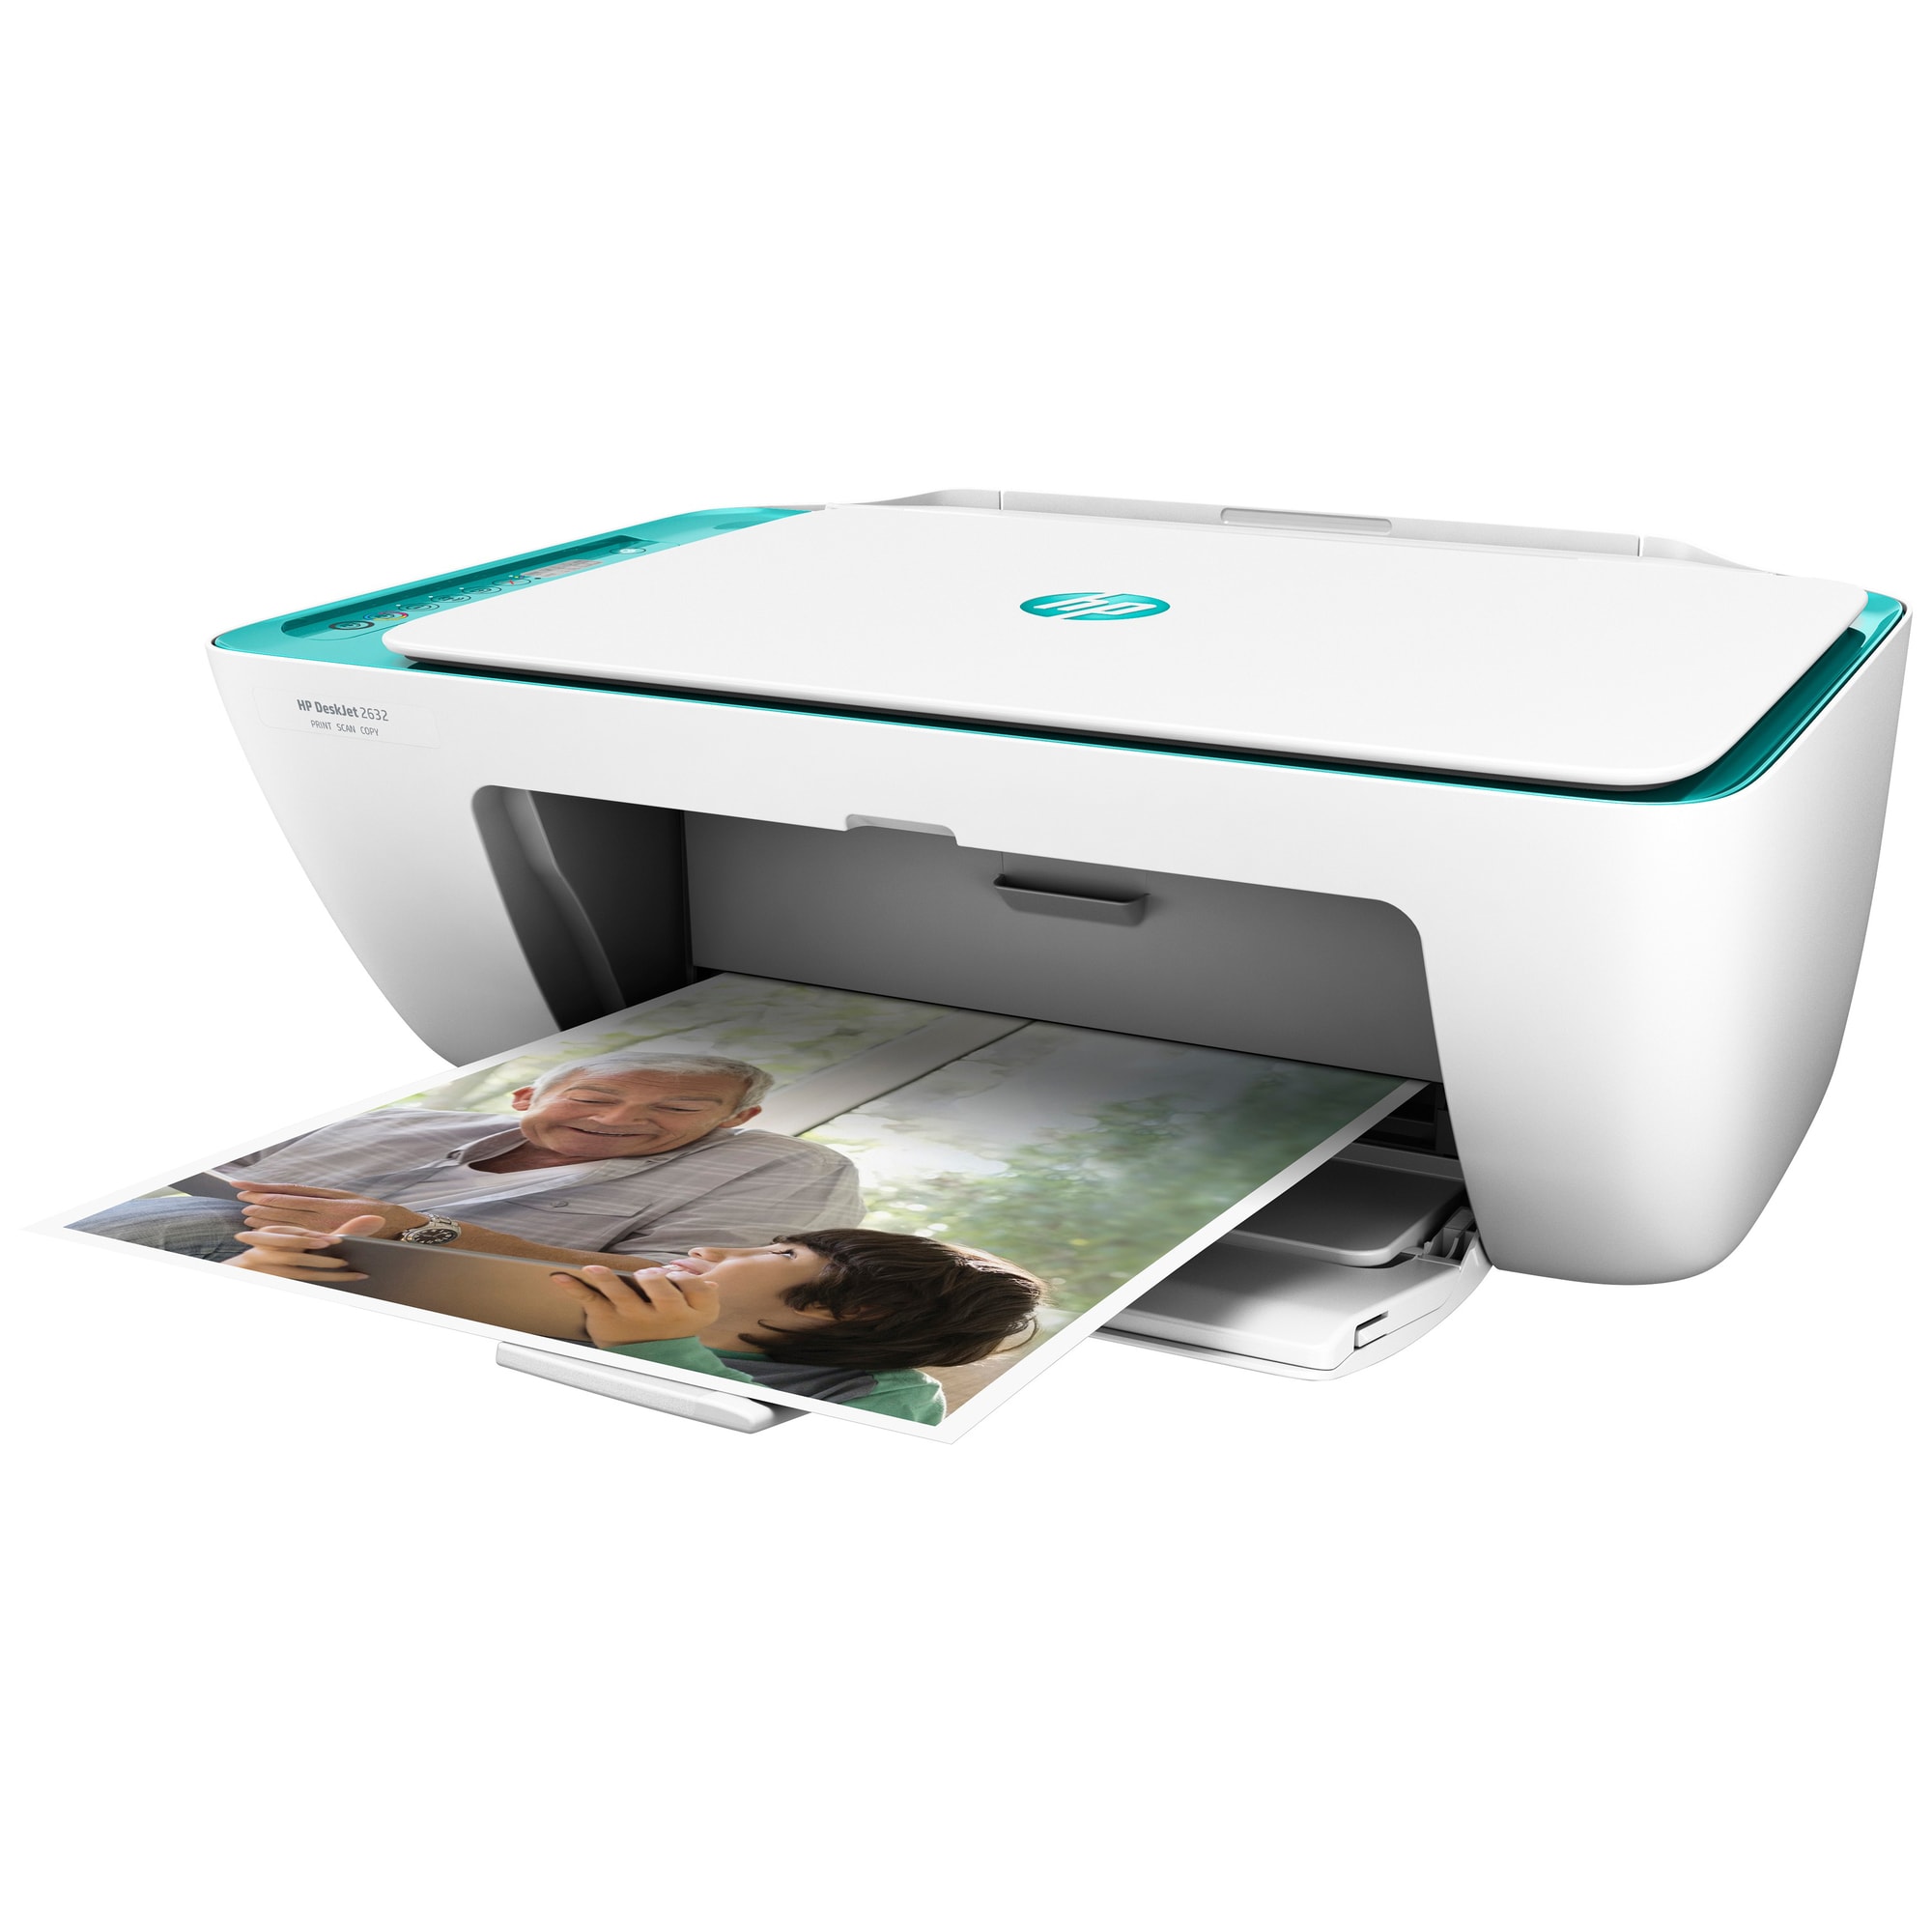 DeskJet 2632 AIO printer (white/teal) | Elgiganten